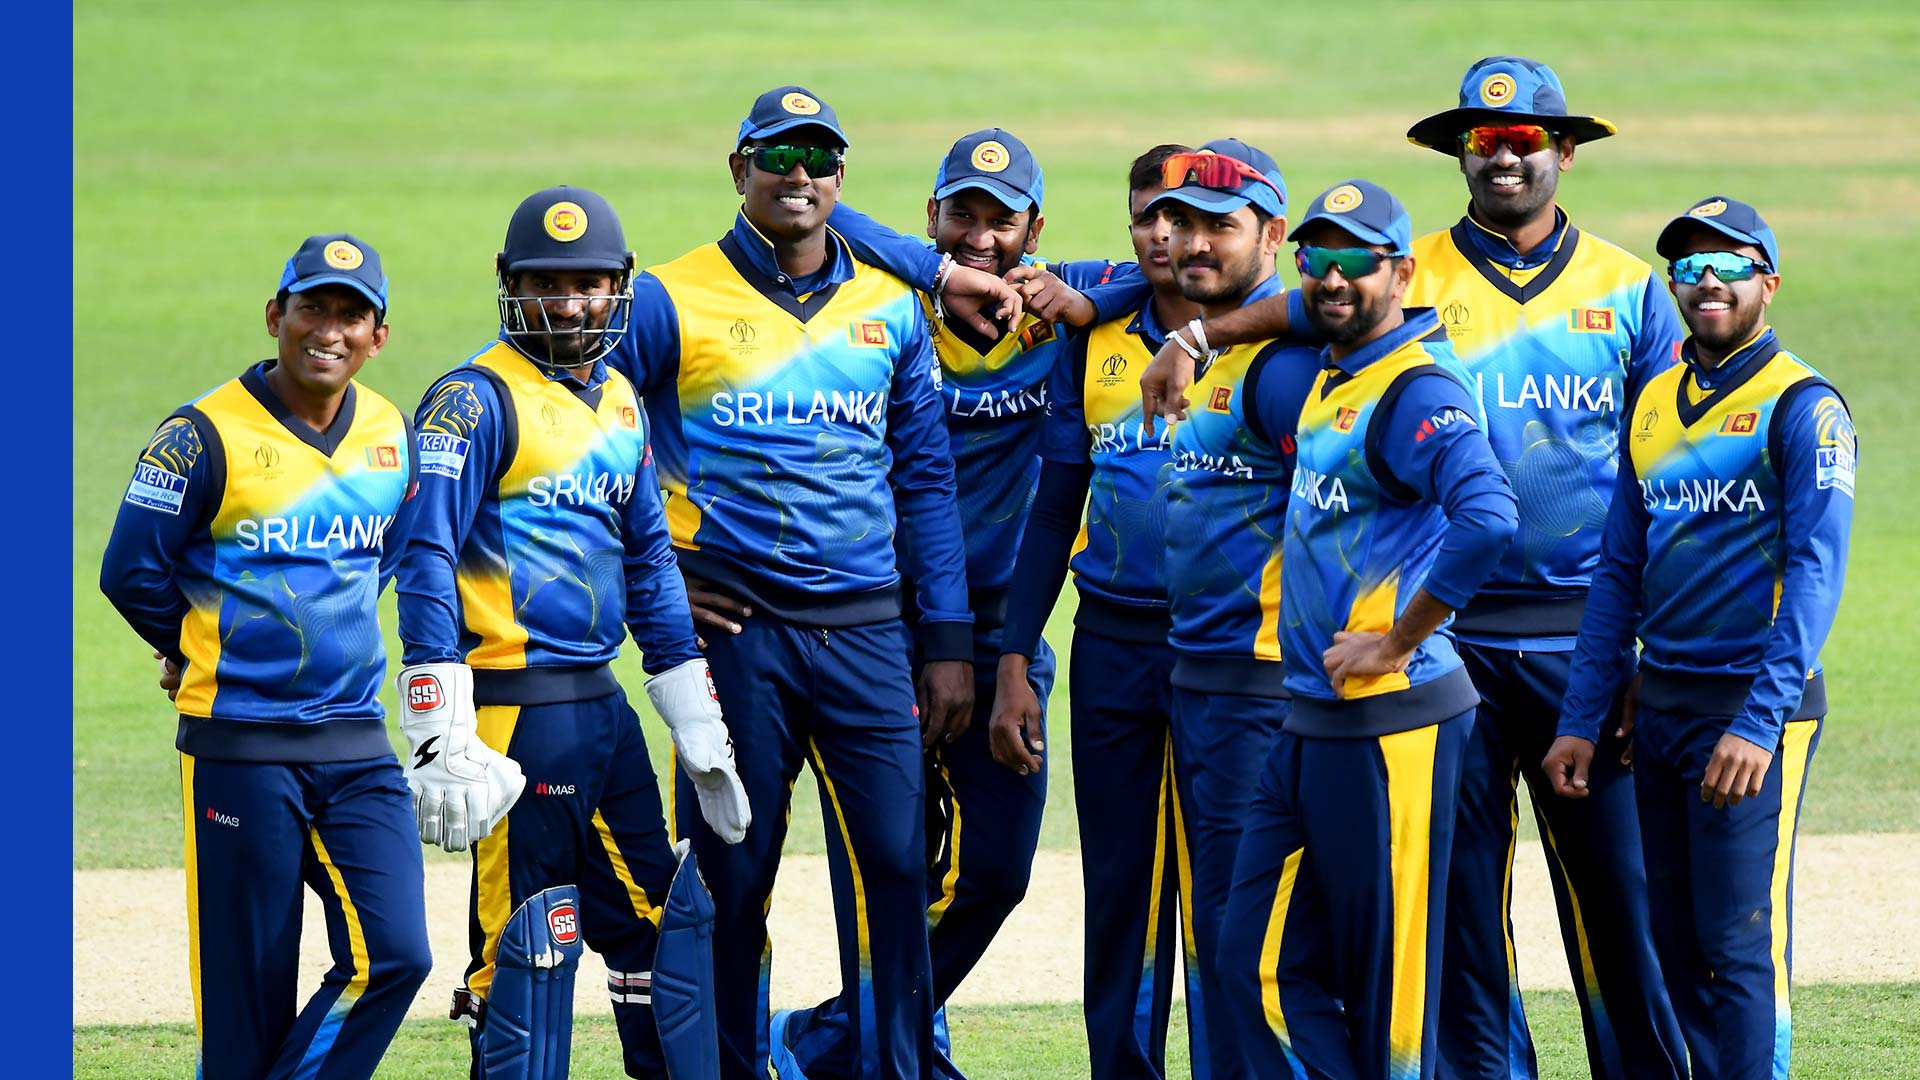 Sri Lankan players Sri Lanka